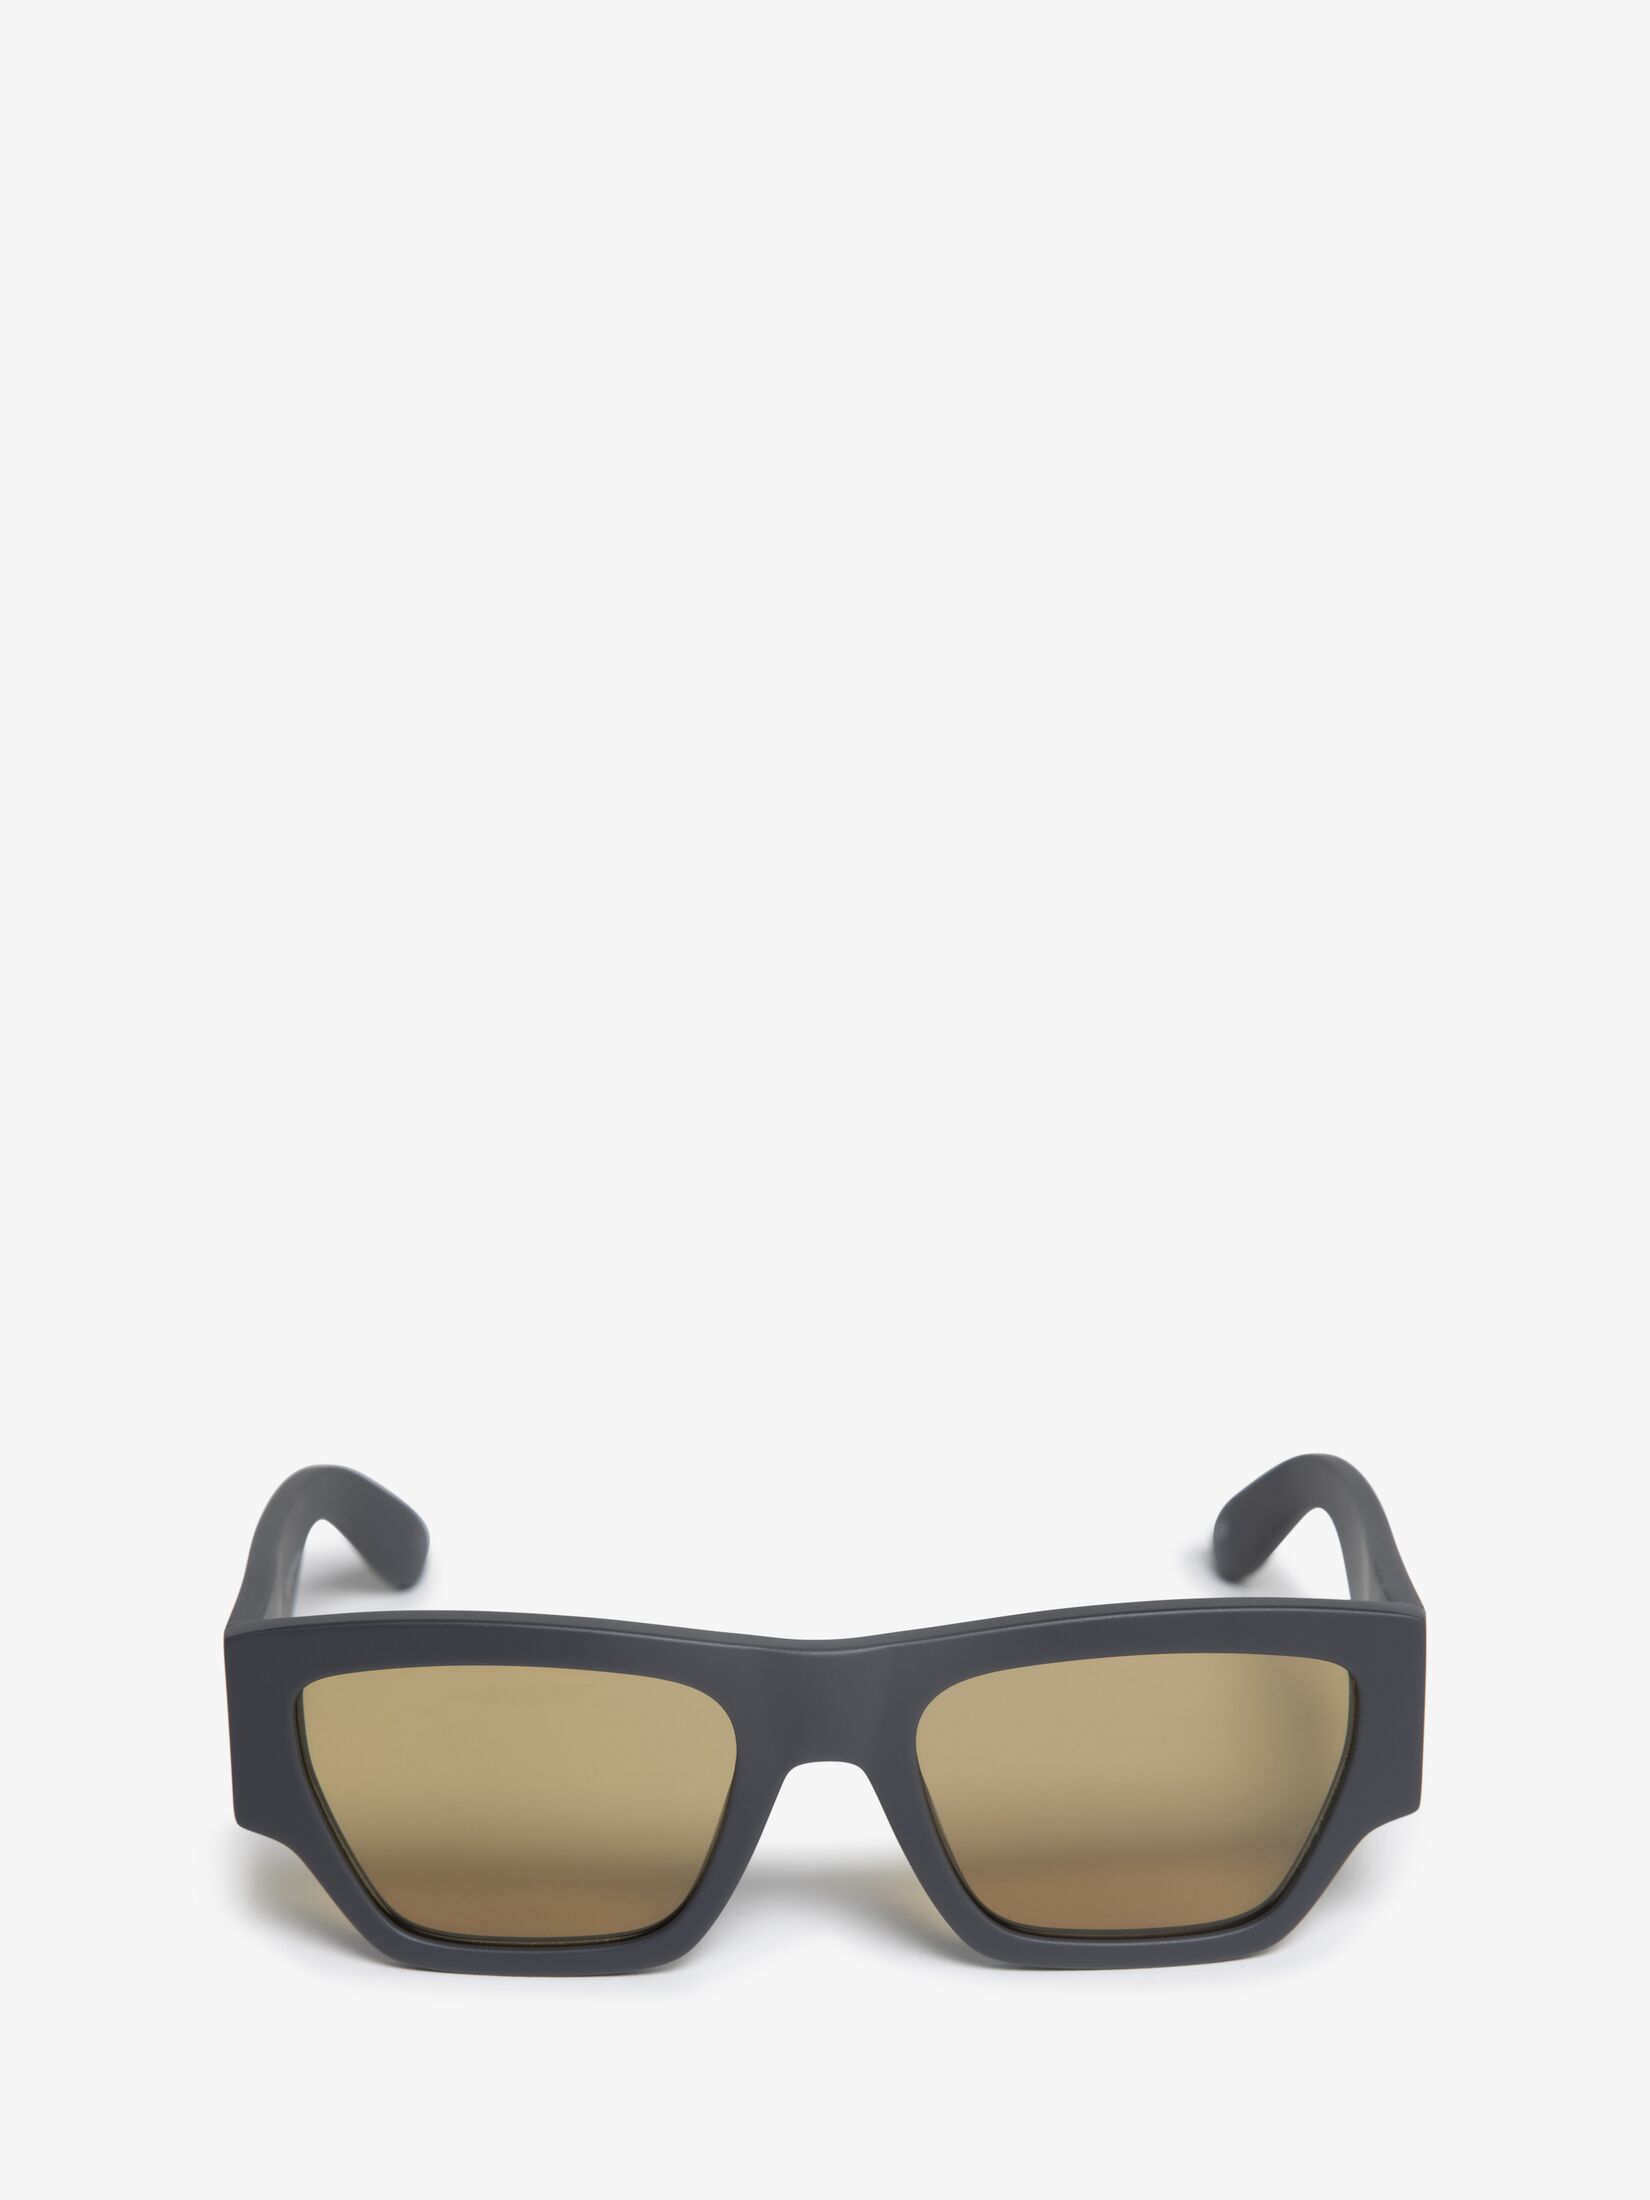 McQueen Graffiti Rectangular Sunglasses in Black/White | Alexander 